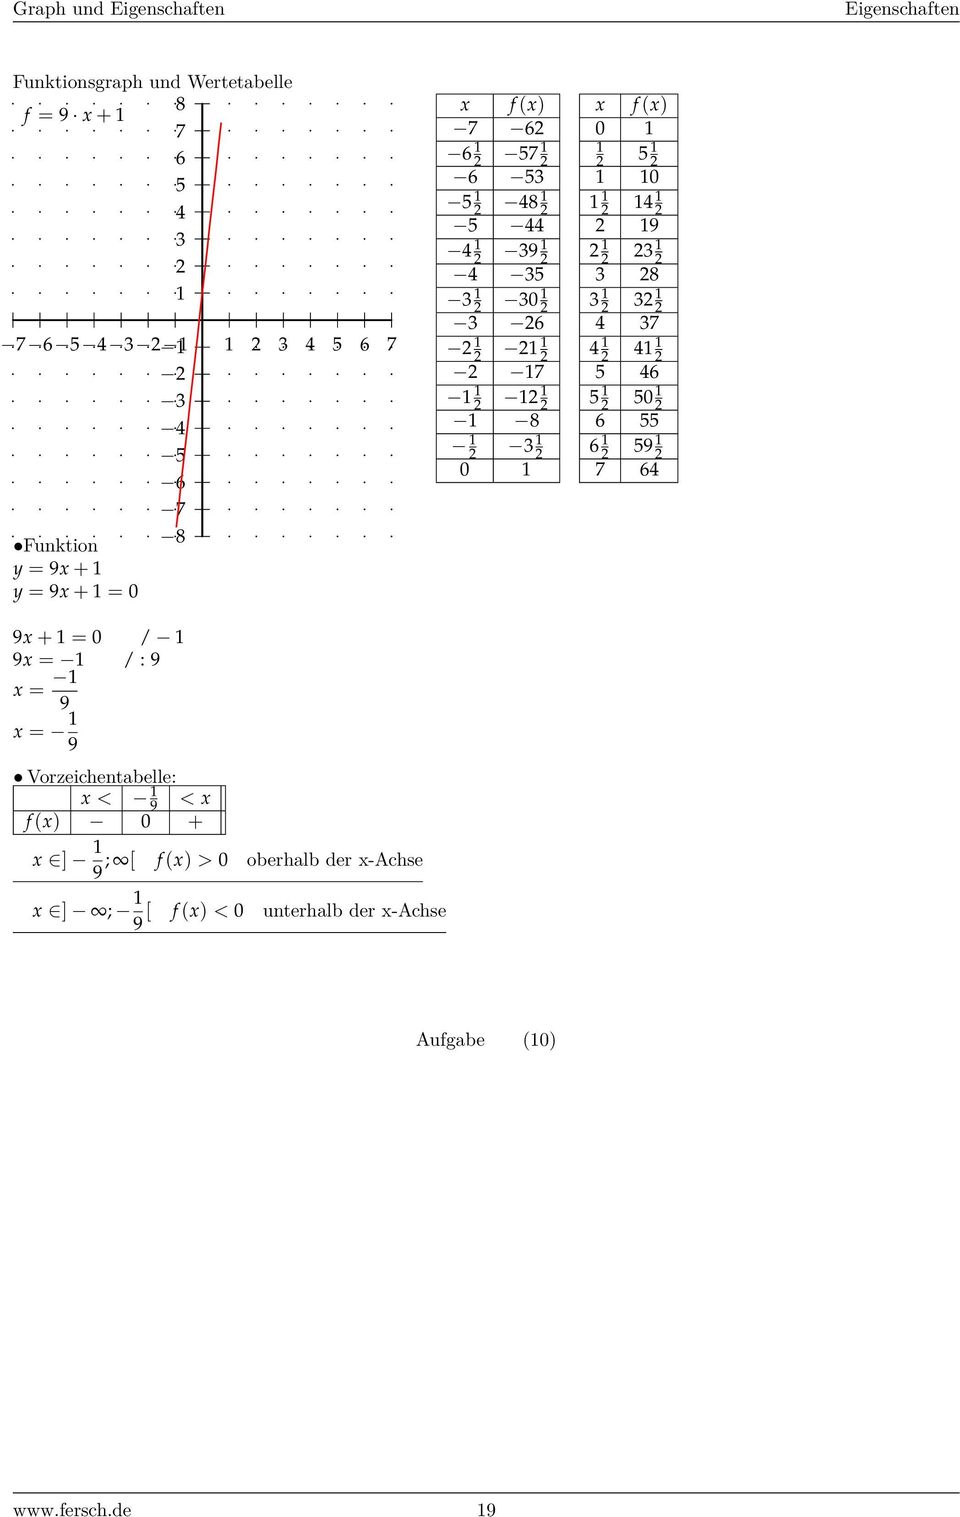 x ] ; [ f (x) > 0 oberhalb der x-achse 9 9 0 0 0 0 9 0 9 x ] ;